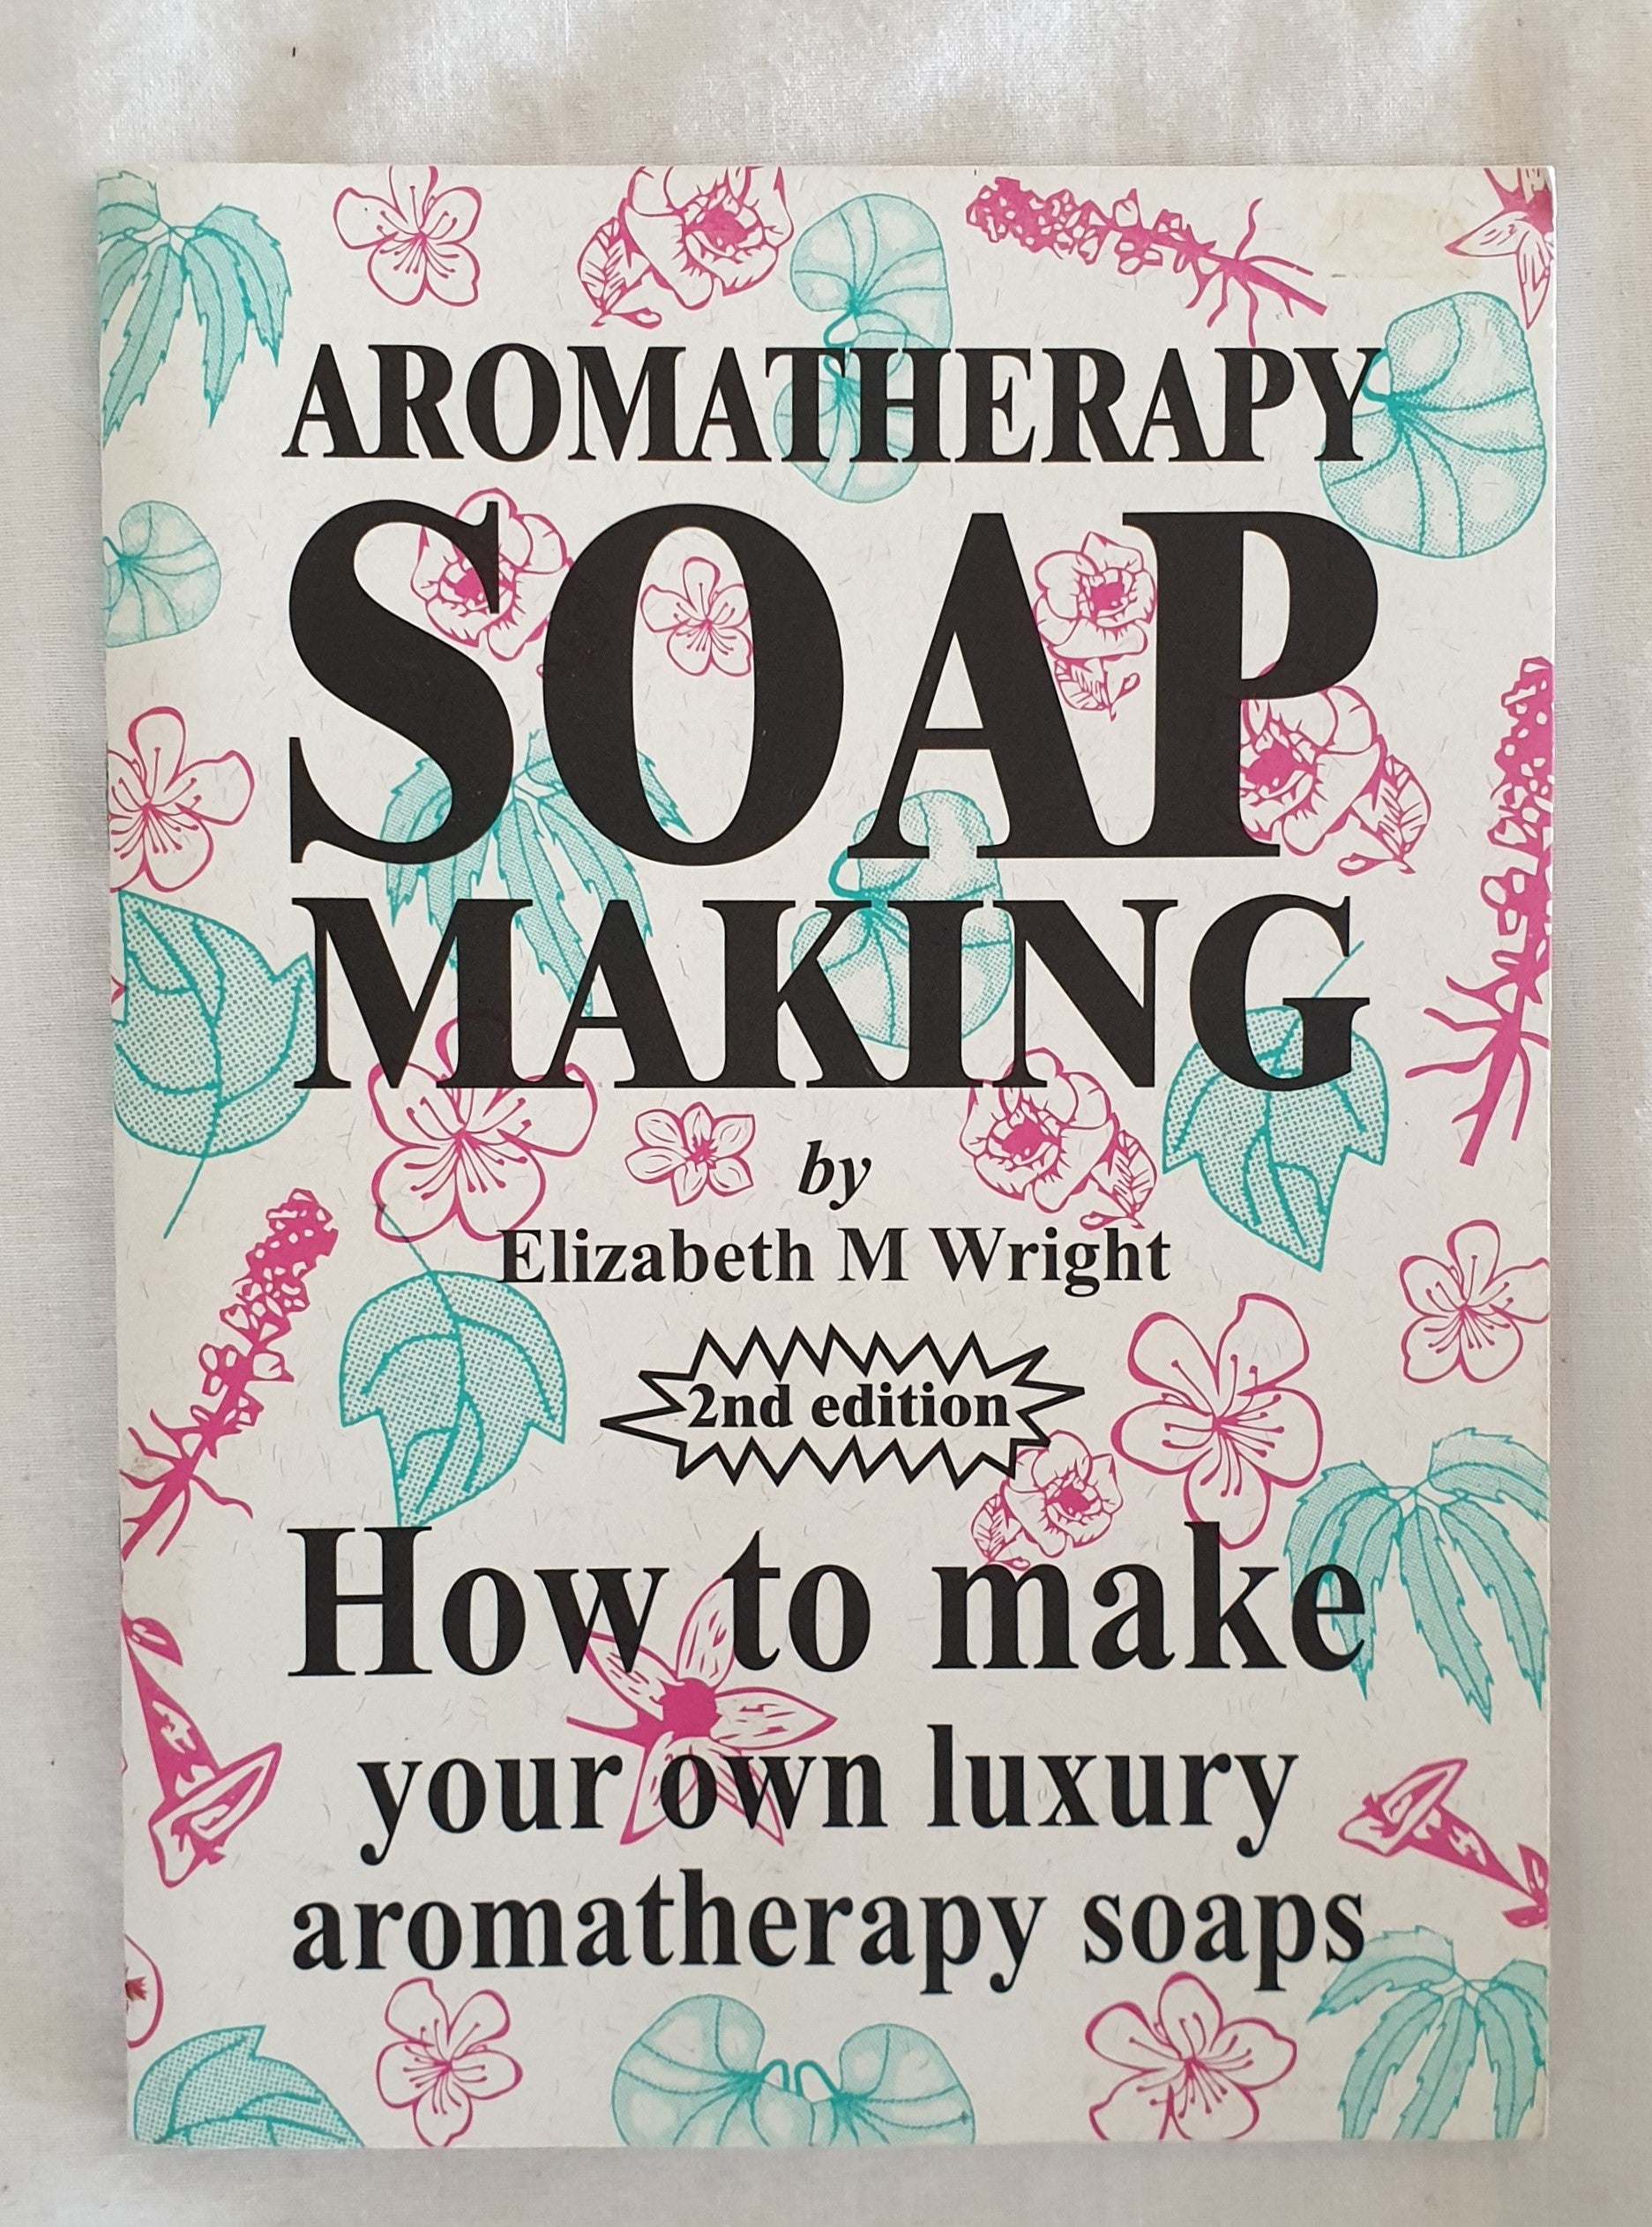 Aromatherapy Soap Making by Elizabeth M Wright